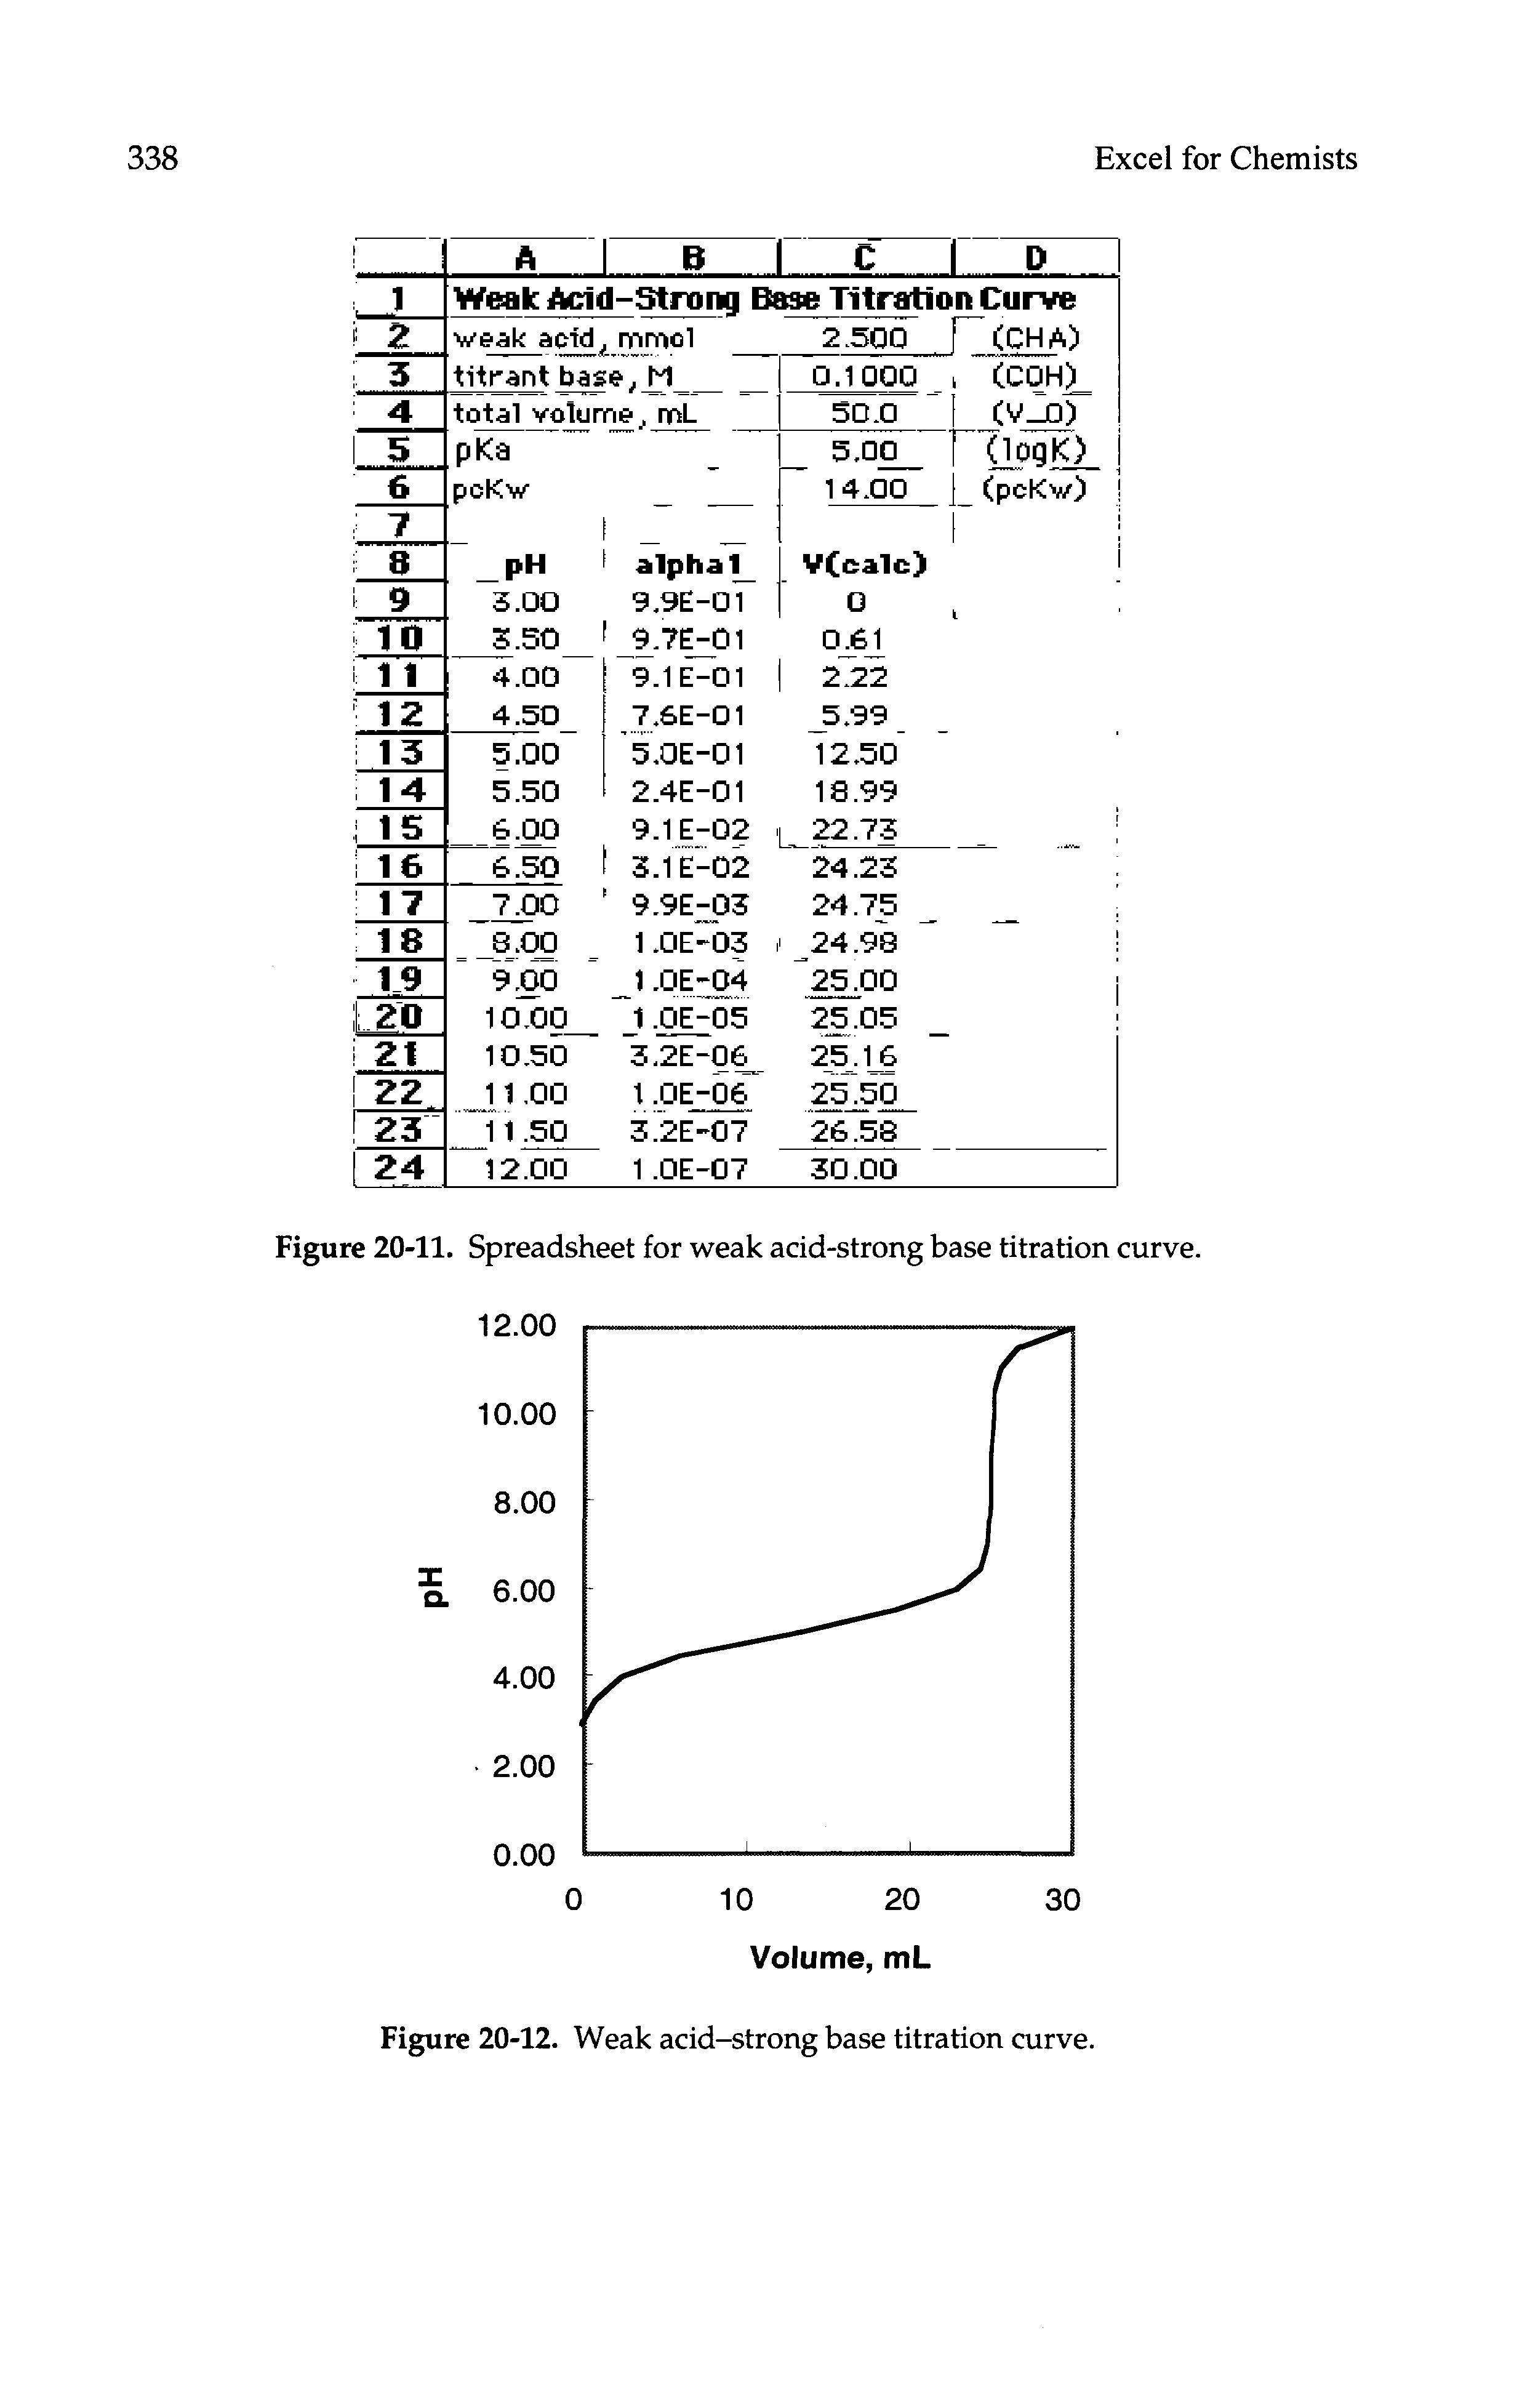 Figure 20-11. Spreadsheet for weak acid-strong base titration curve.